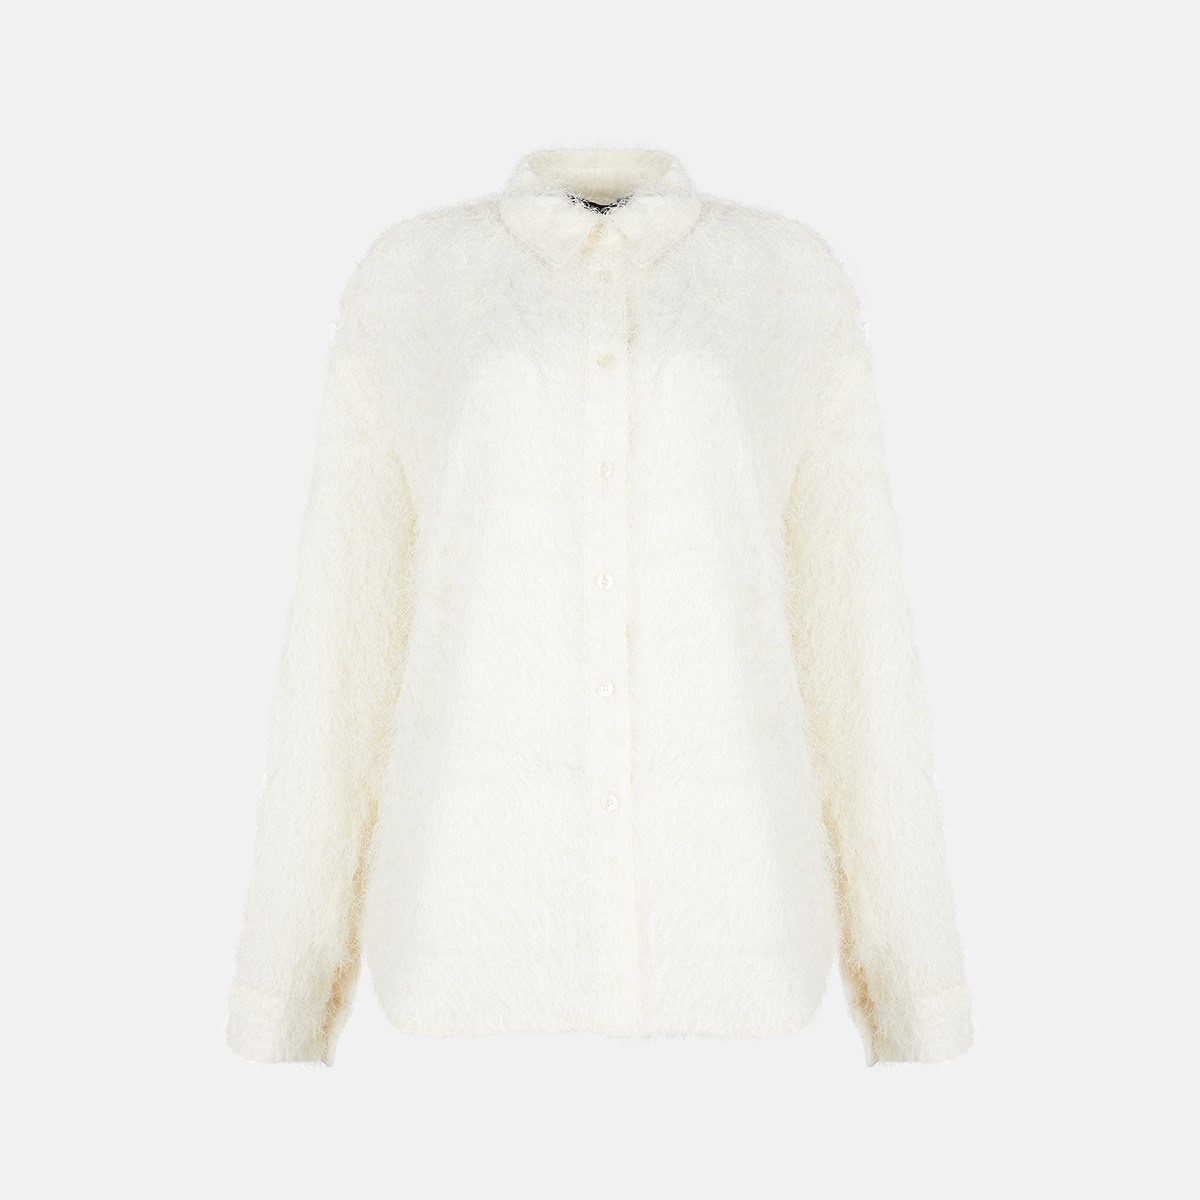 Fur Detail White Shirt X233CZ5371I